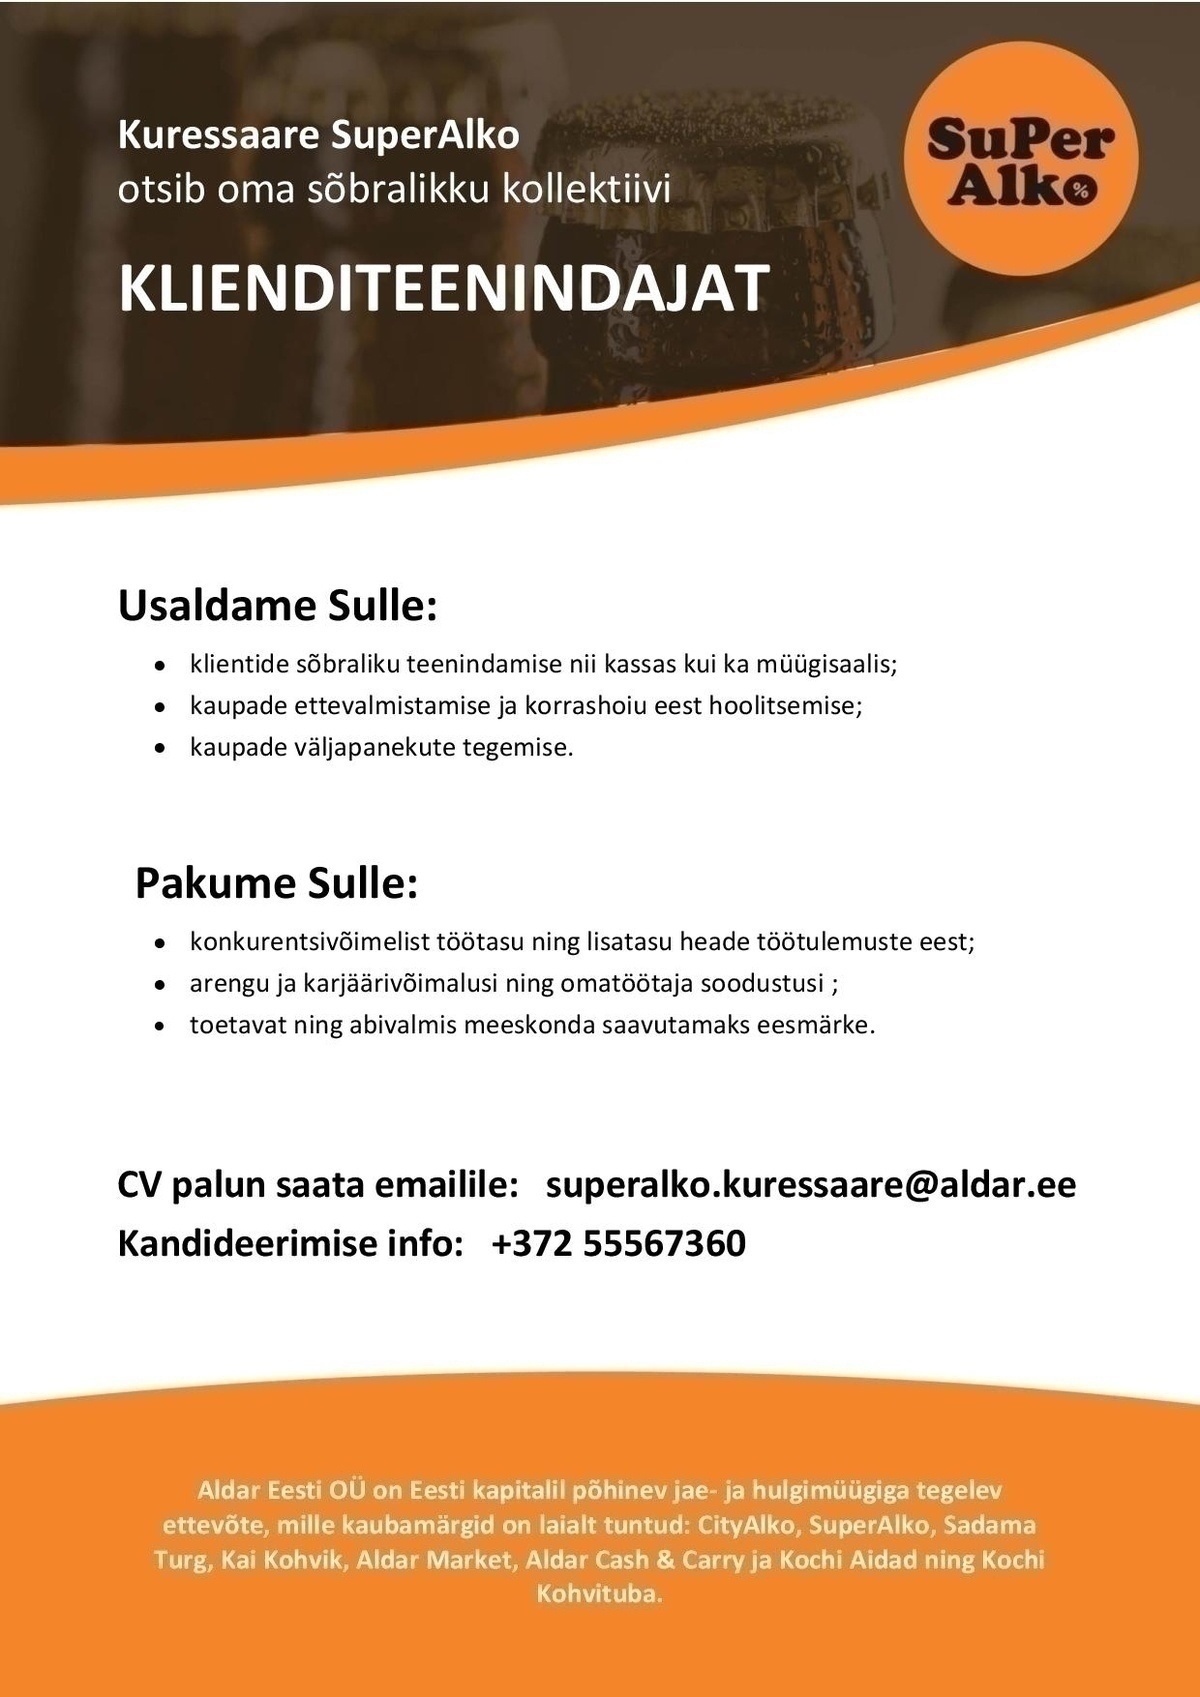 Aldar Eesti OÜ Klienditeenindaja Kuressaare SuperAlko kaupluses